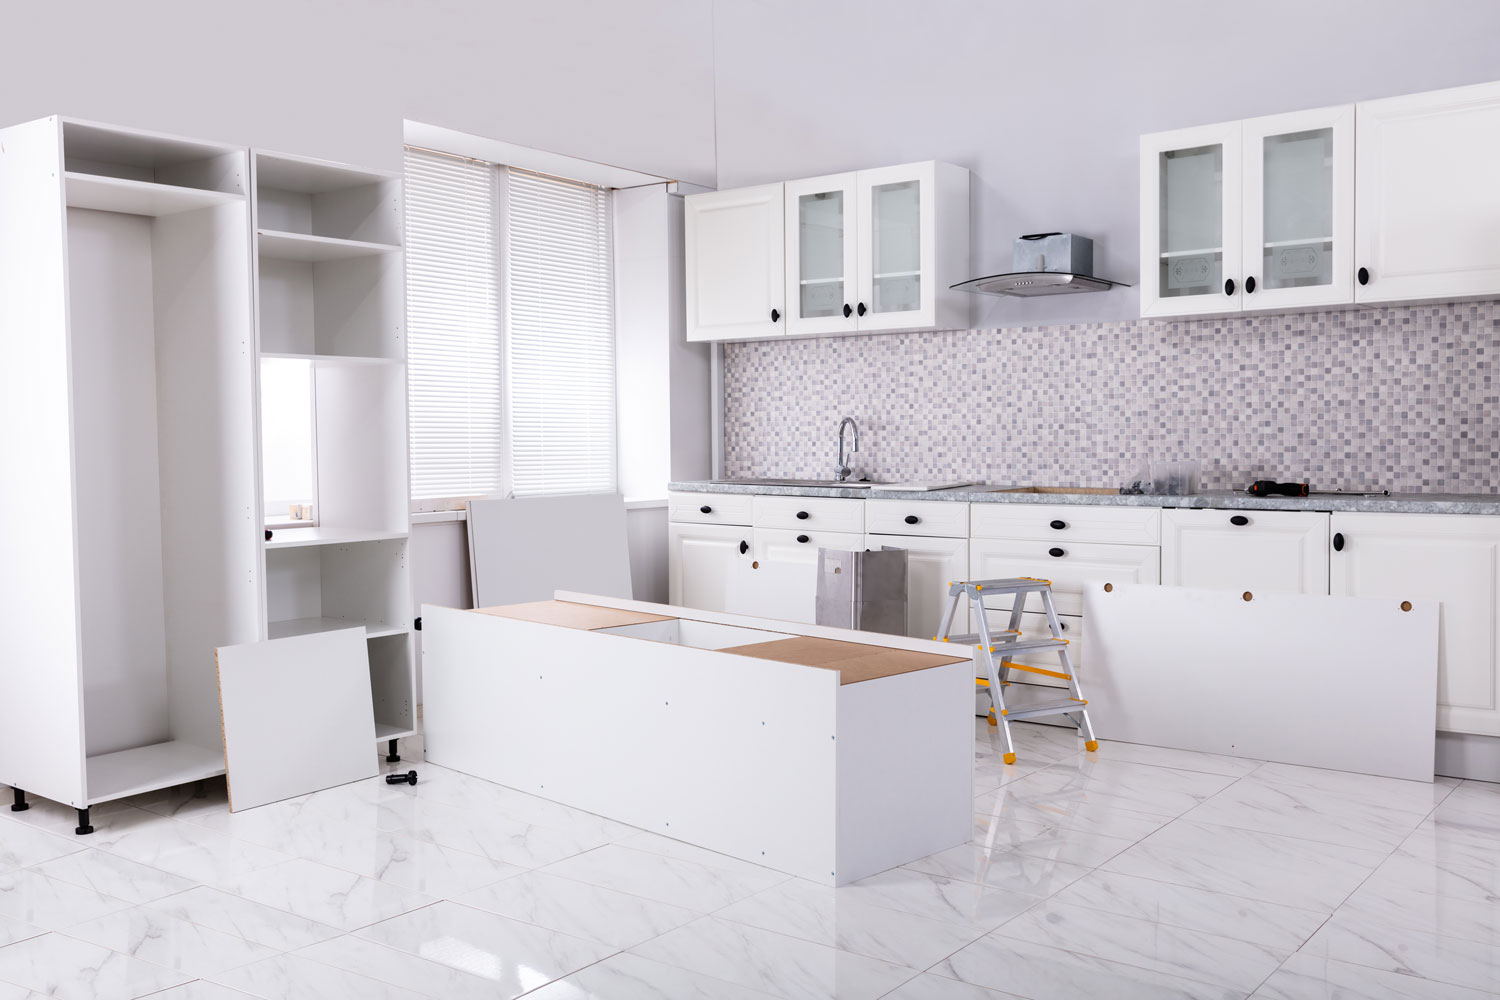 White themed kitchen undergoing construction